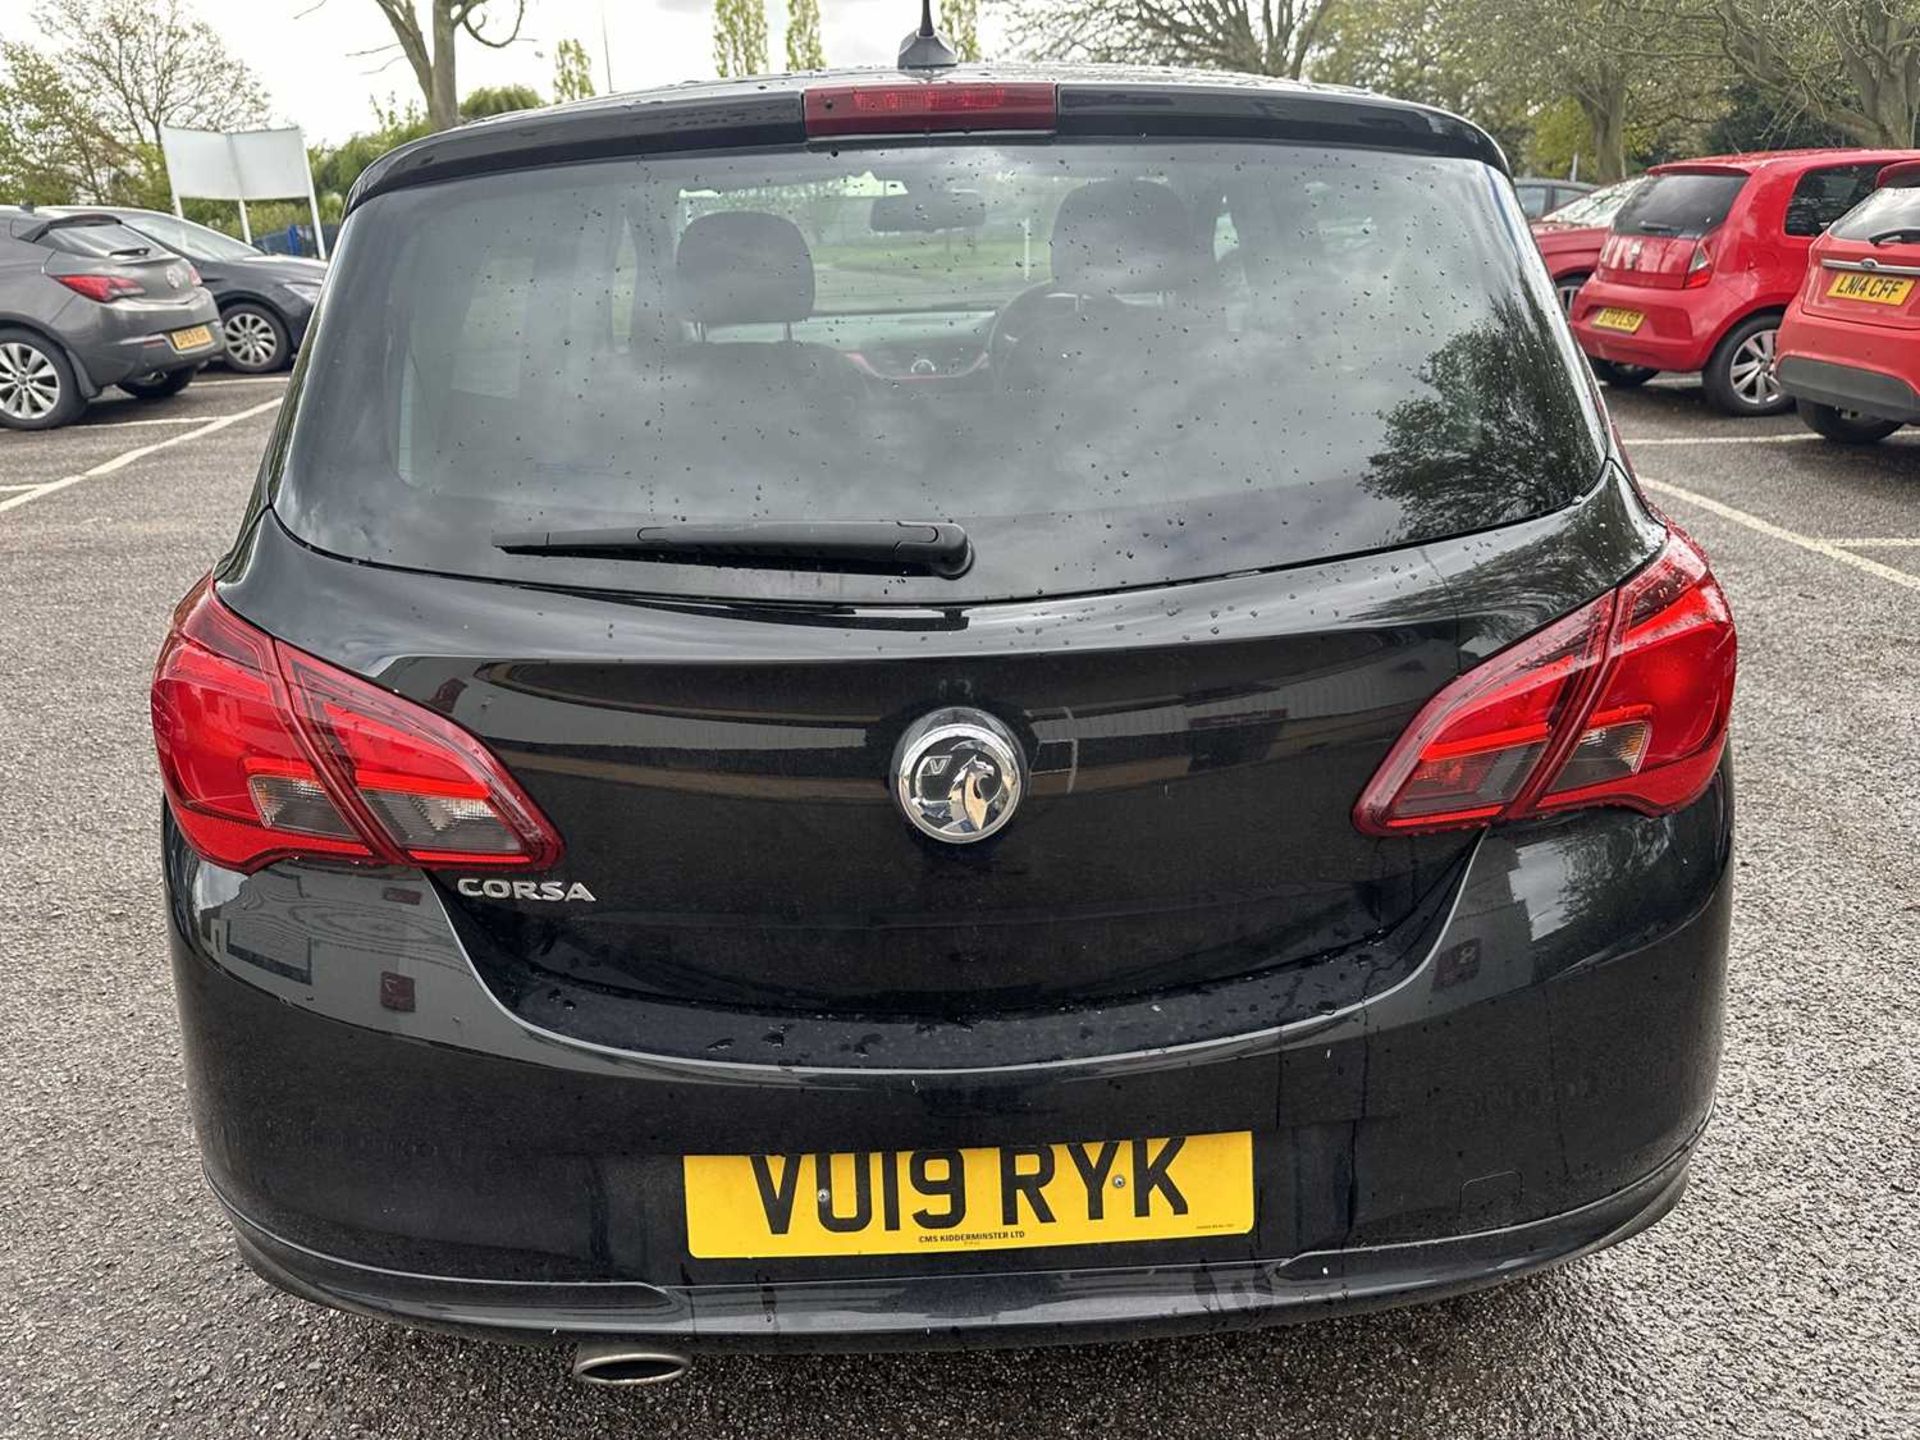 2019 Vauxhall Corsa SRI VX - Line Nav Black, 5 door hatchback, manual, reg. no. VU19 RYK - Bild 6 aus 15